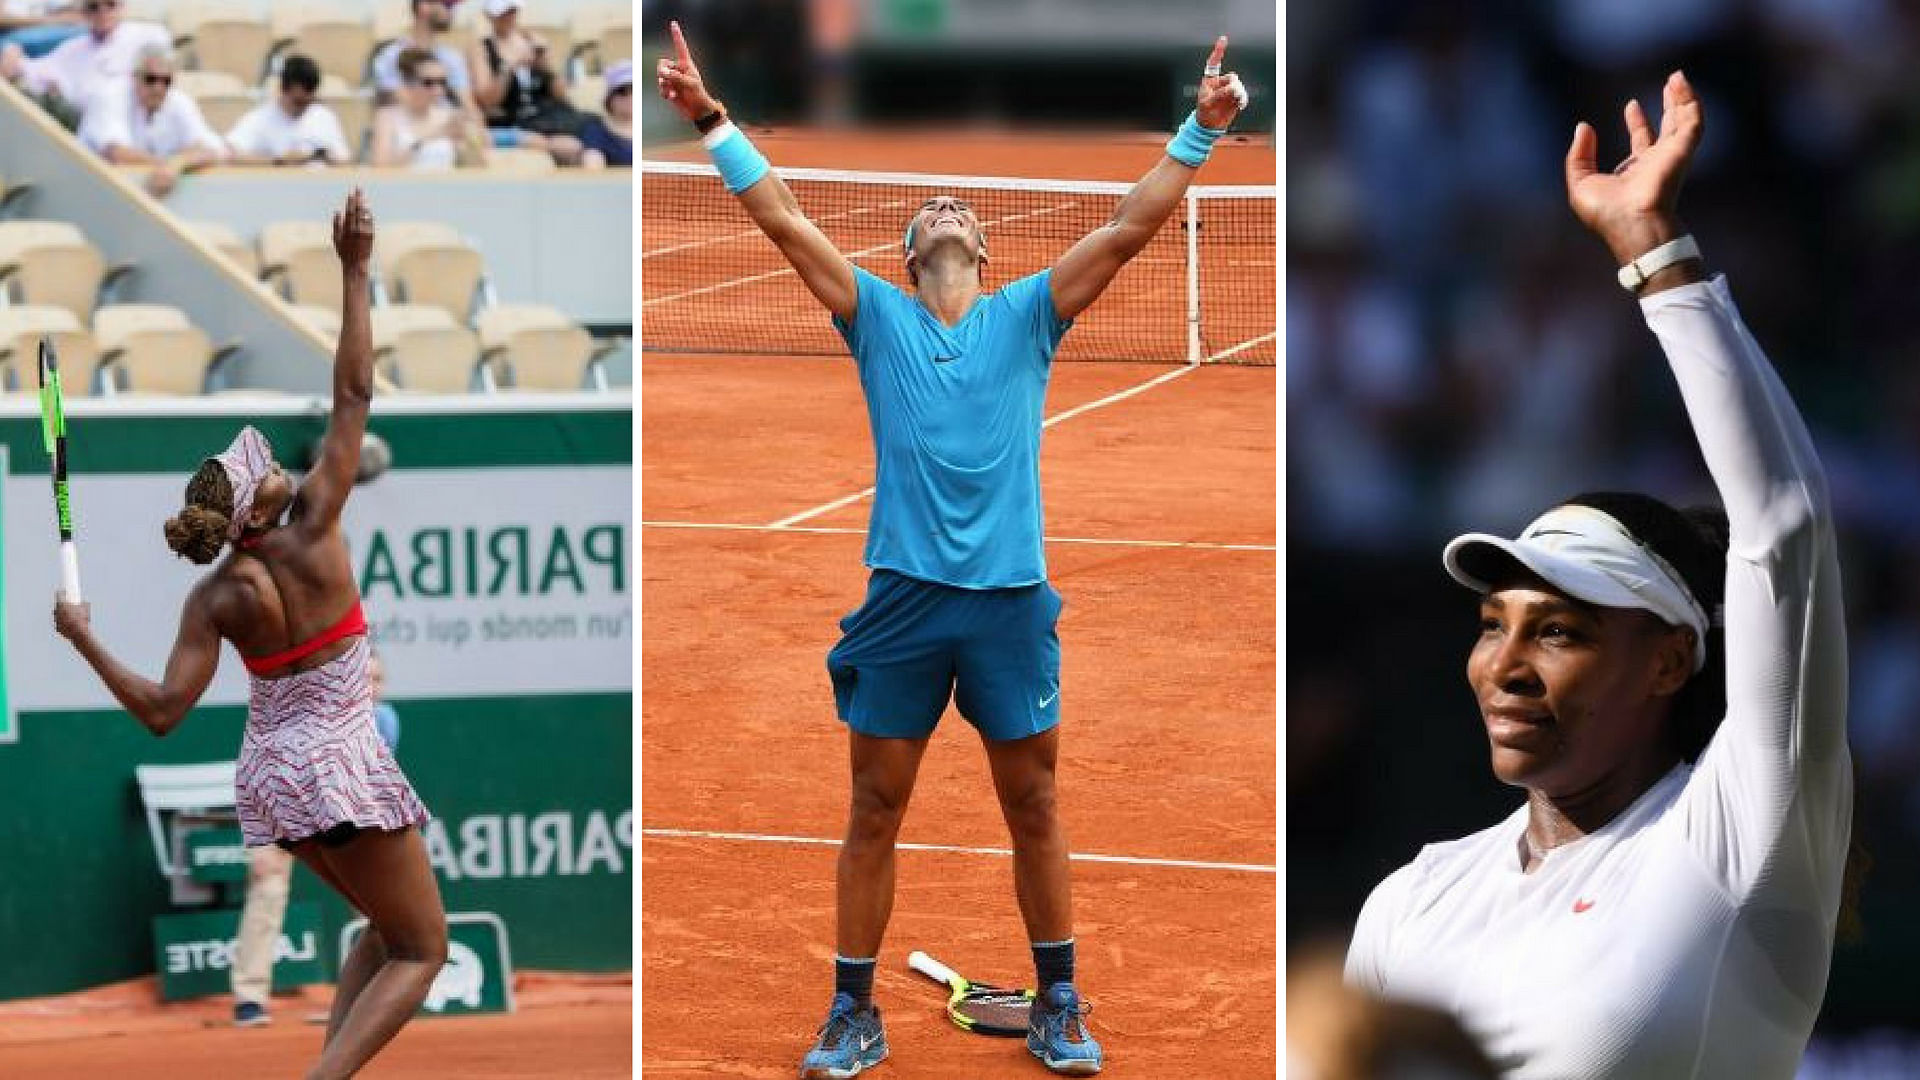 Venus Williams (L) will take on Svetlana Kuznetsova in her first match of the tournament, whereas Rafael Nadal’s (C) campaign opens against David Ferrer.